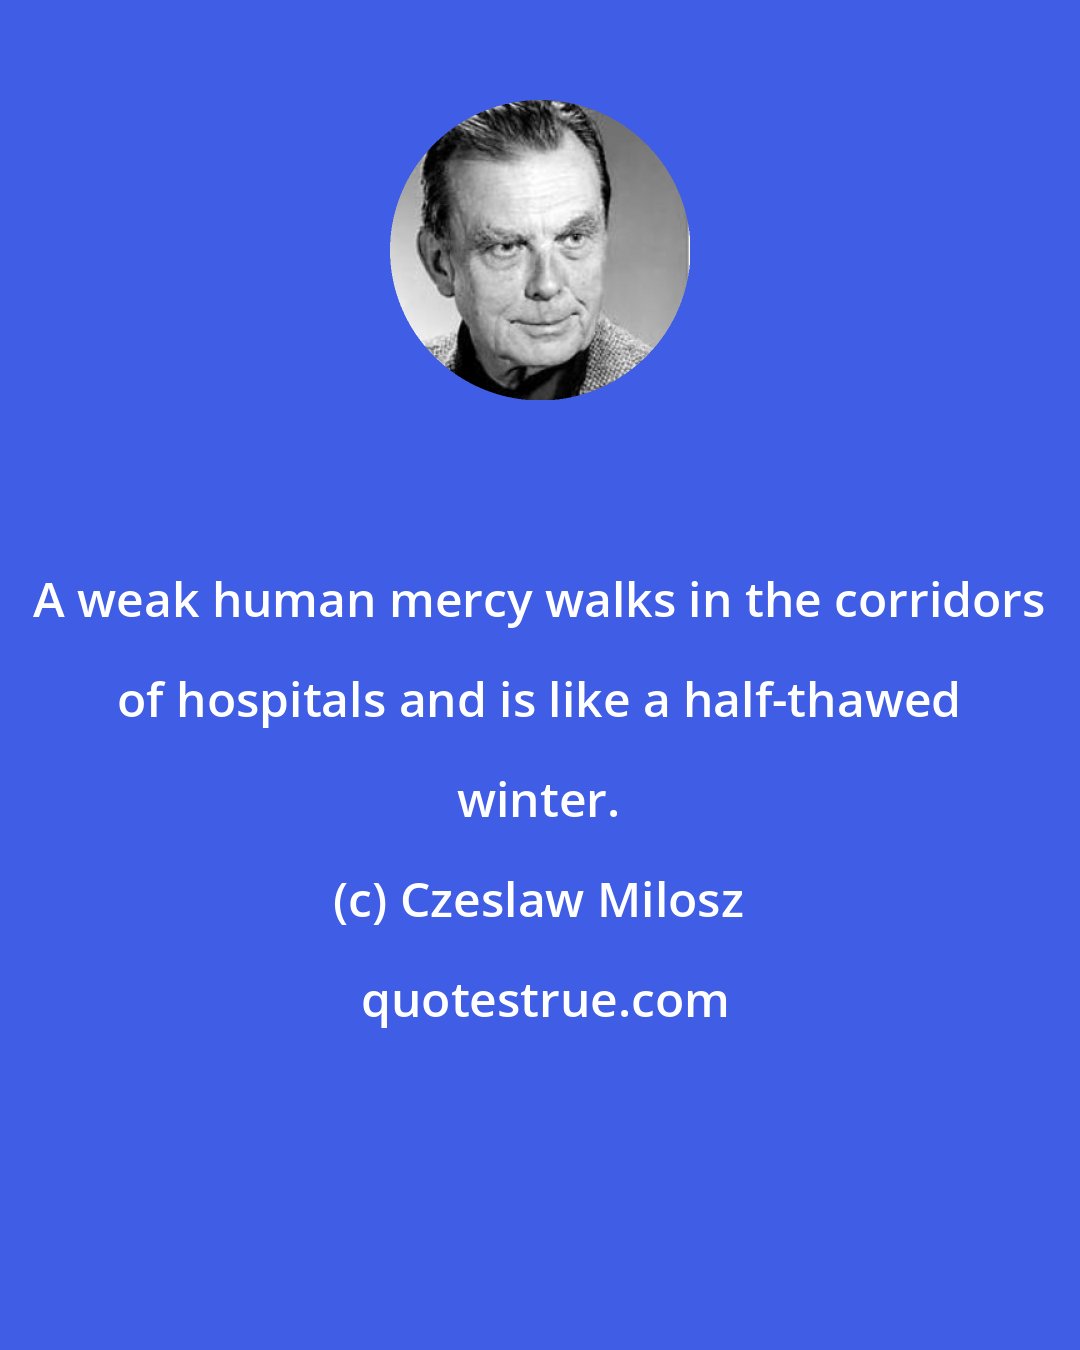 Czeslaw Milosz: A weak human mercy walks in the corridors of hospitals and is like a half-thawed winter.